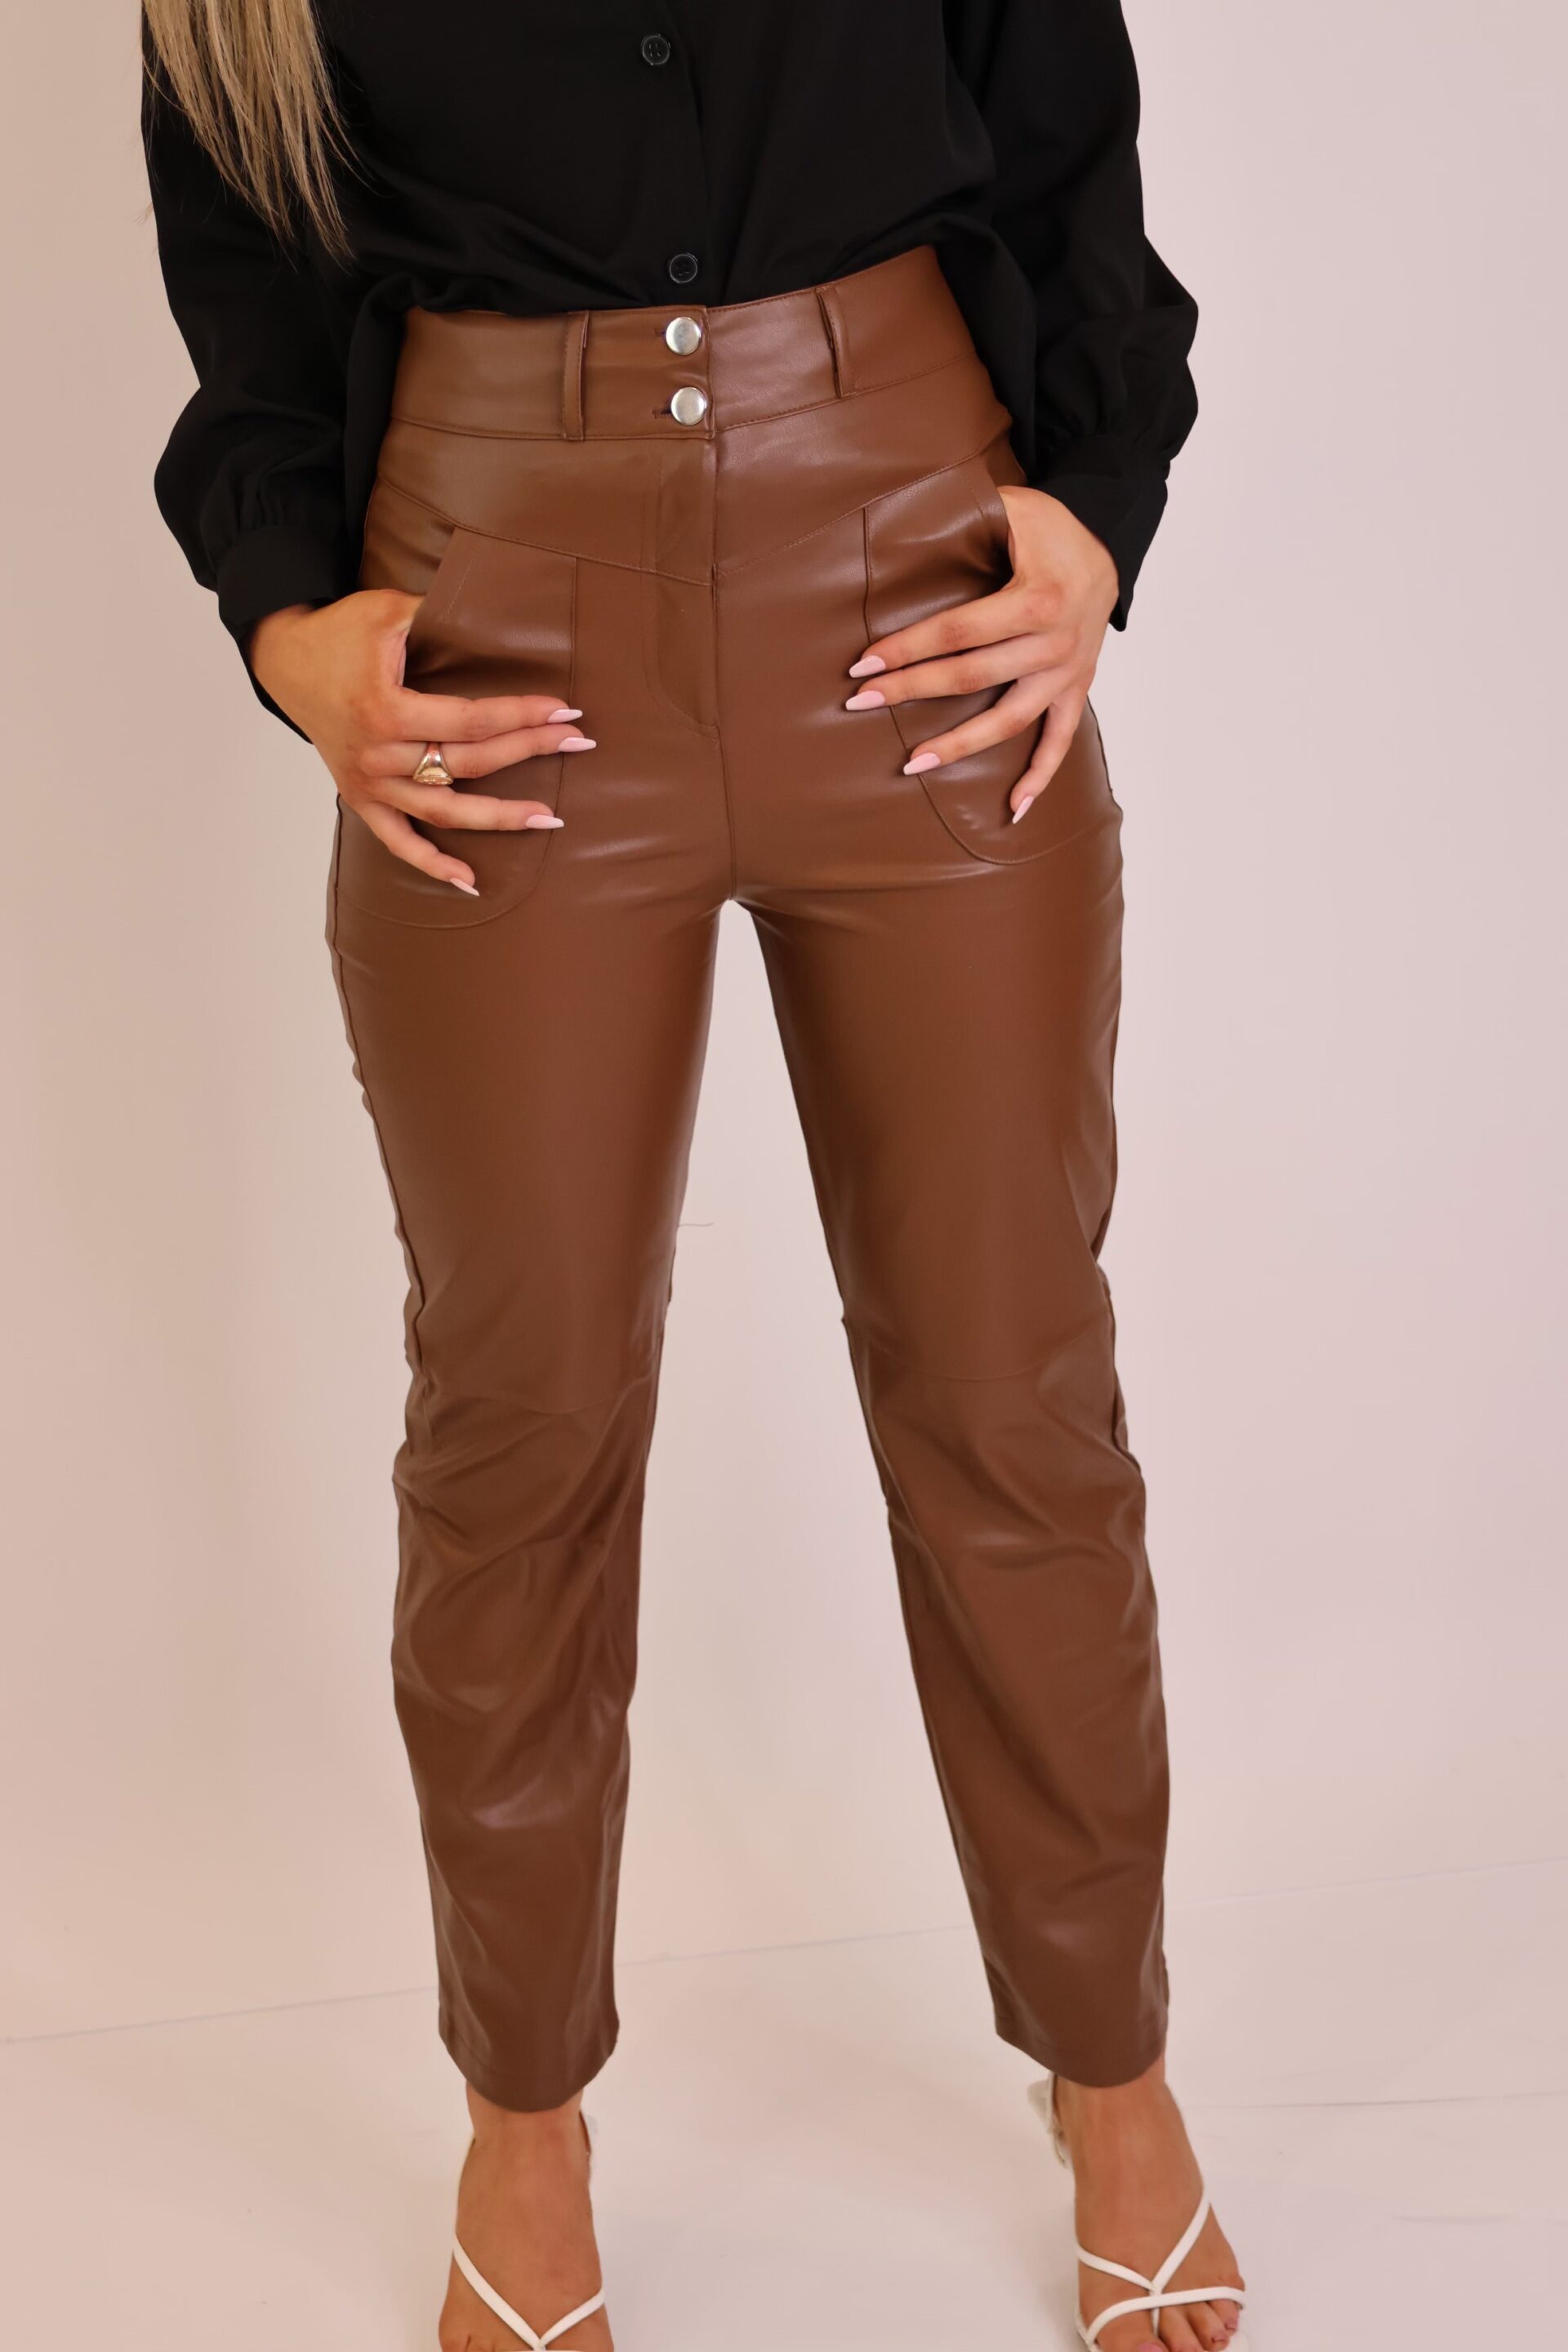 Women's pants - IRO | Official online store